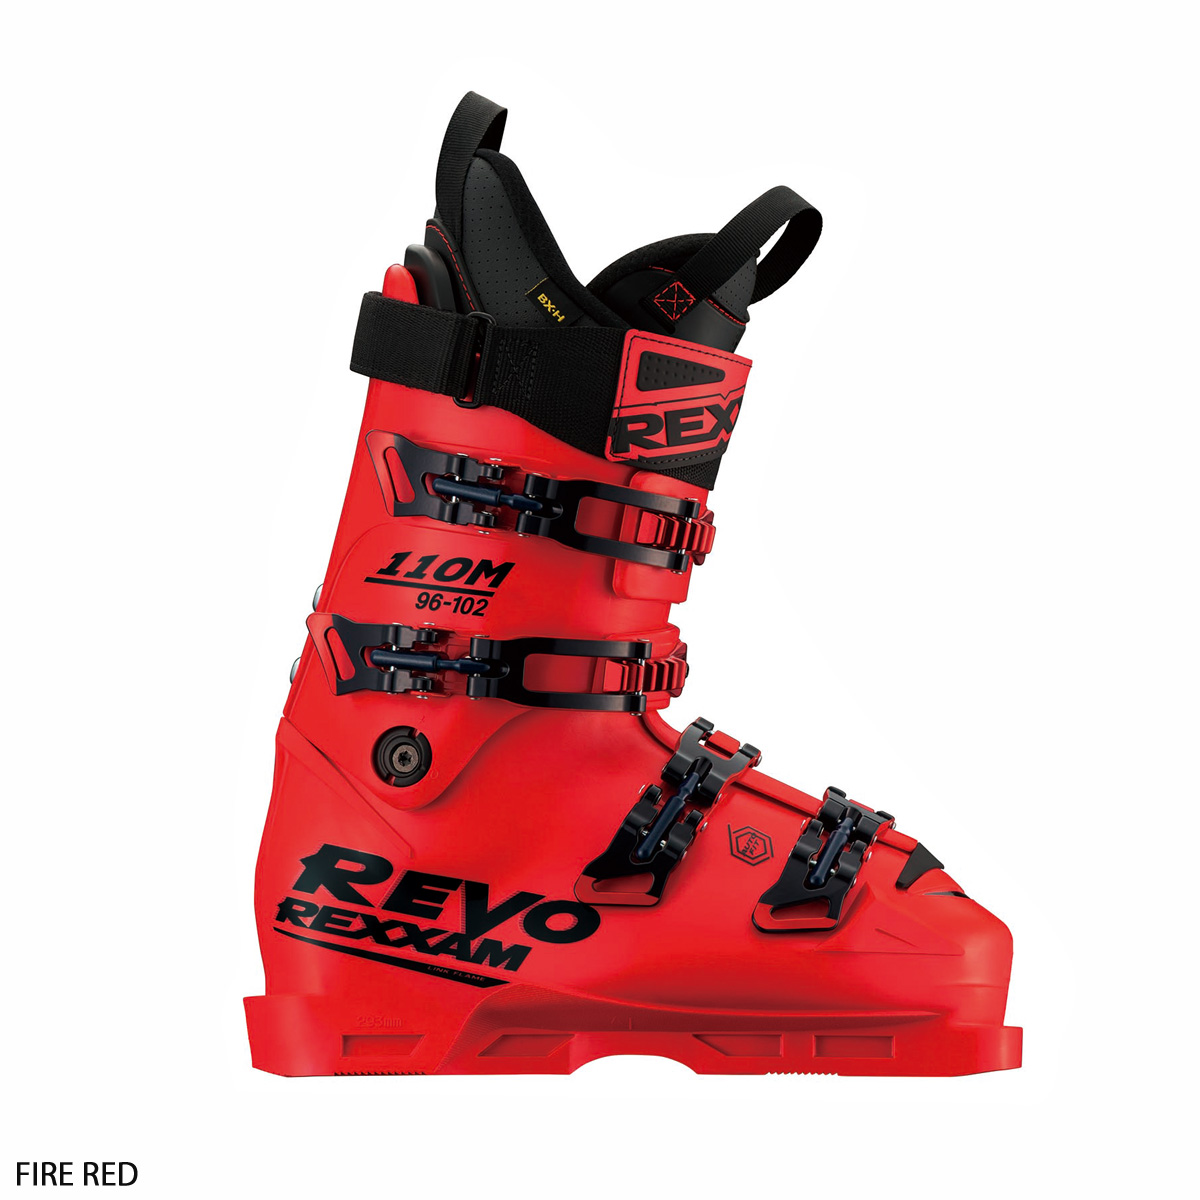 REXXAMrek Zam лыжи ботинки мужской женский <2024> R-EVO 110M (R Evo 110M)/ 23-24 NEW модель 